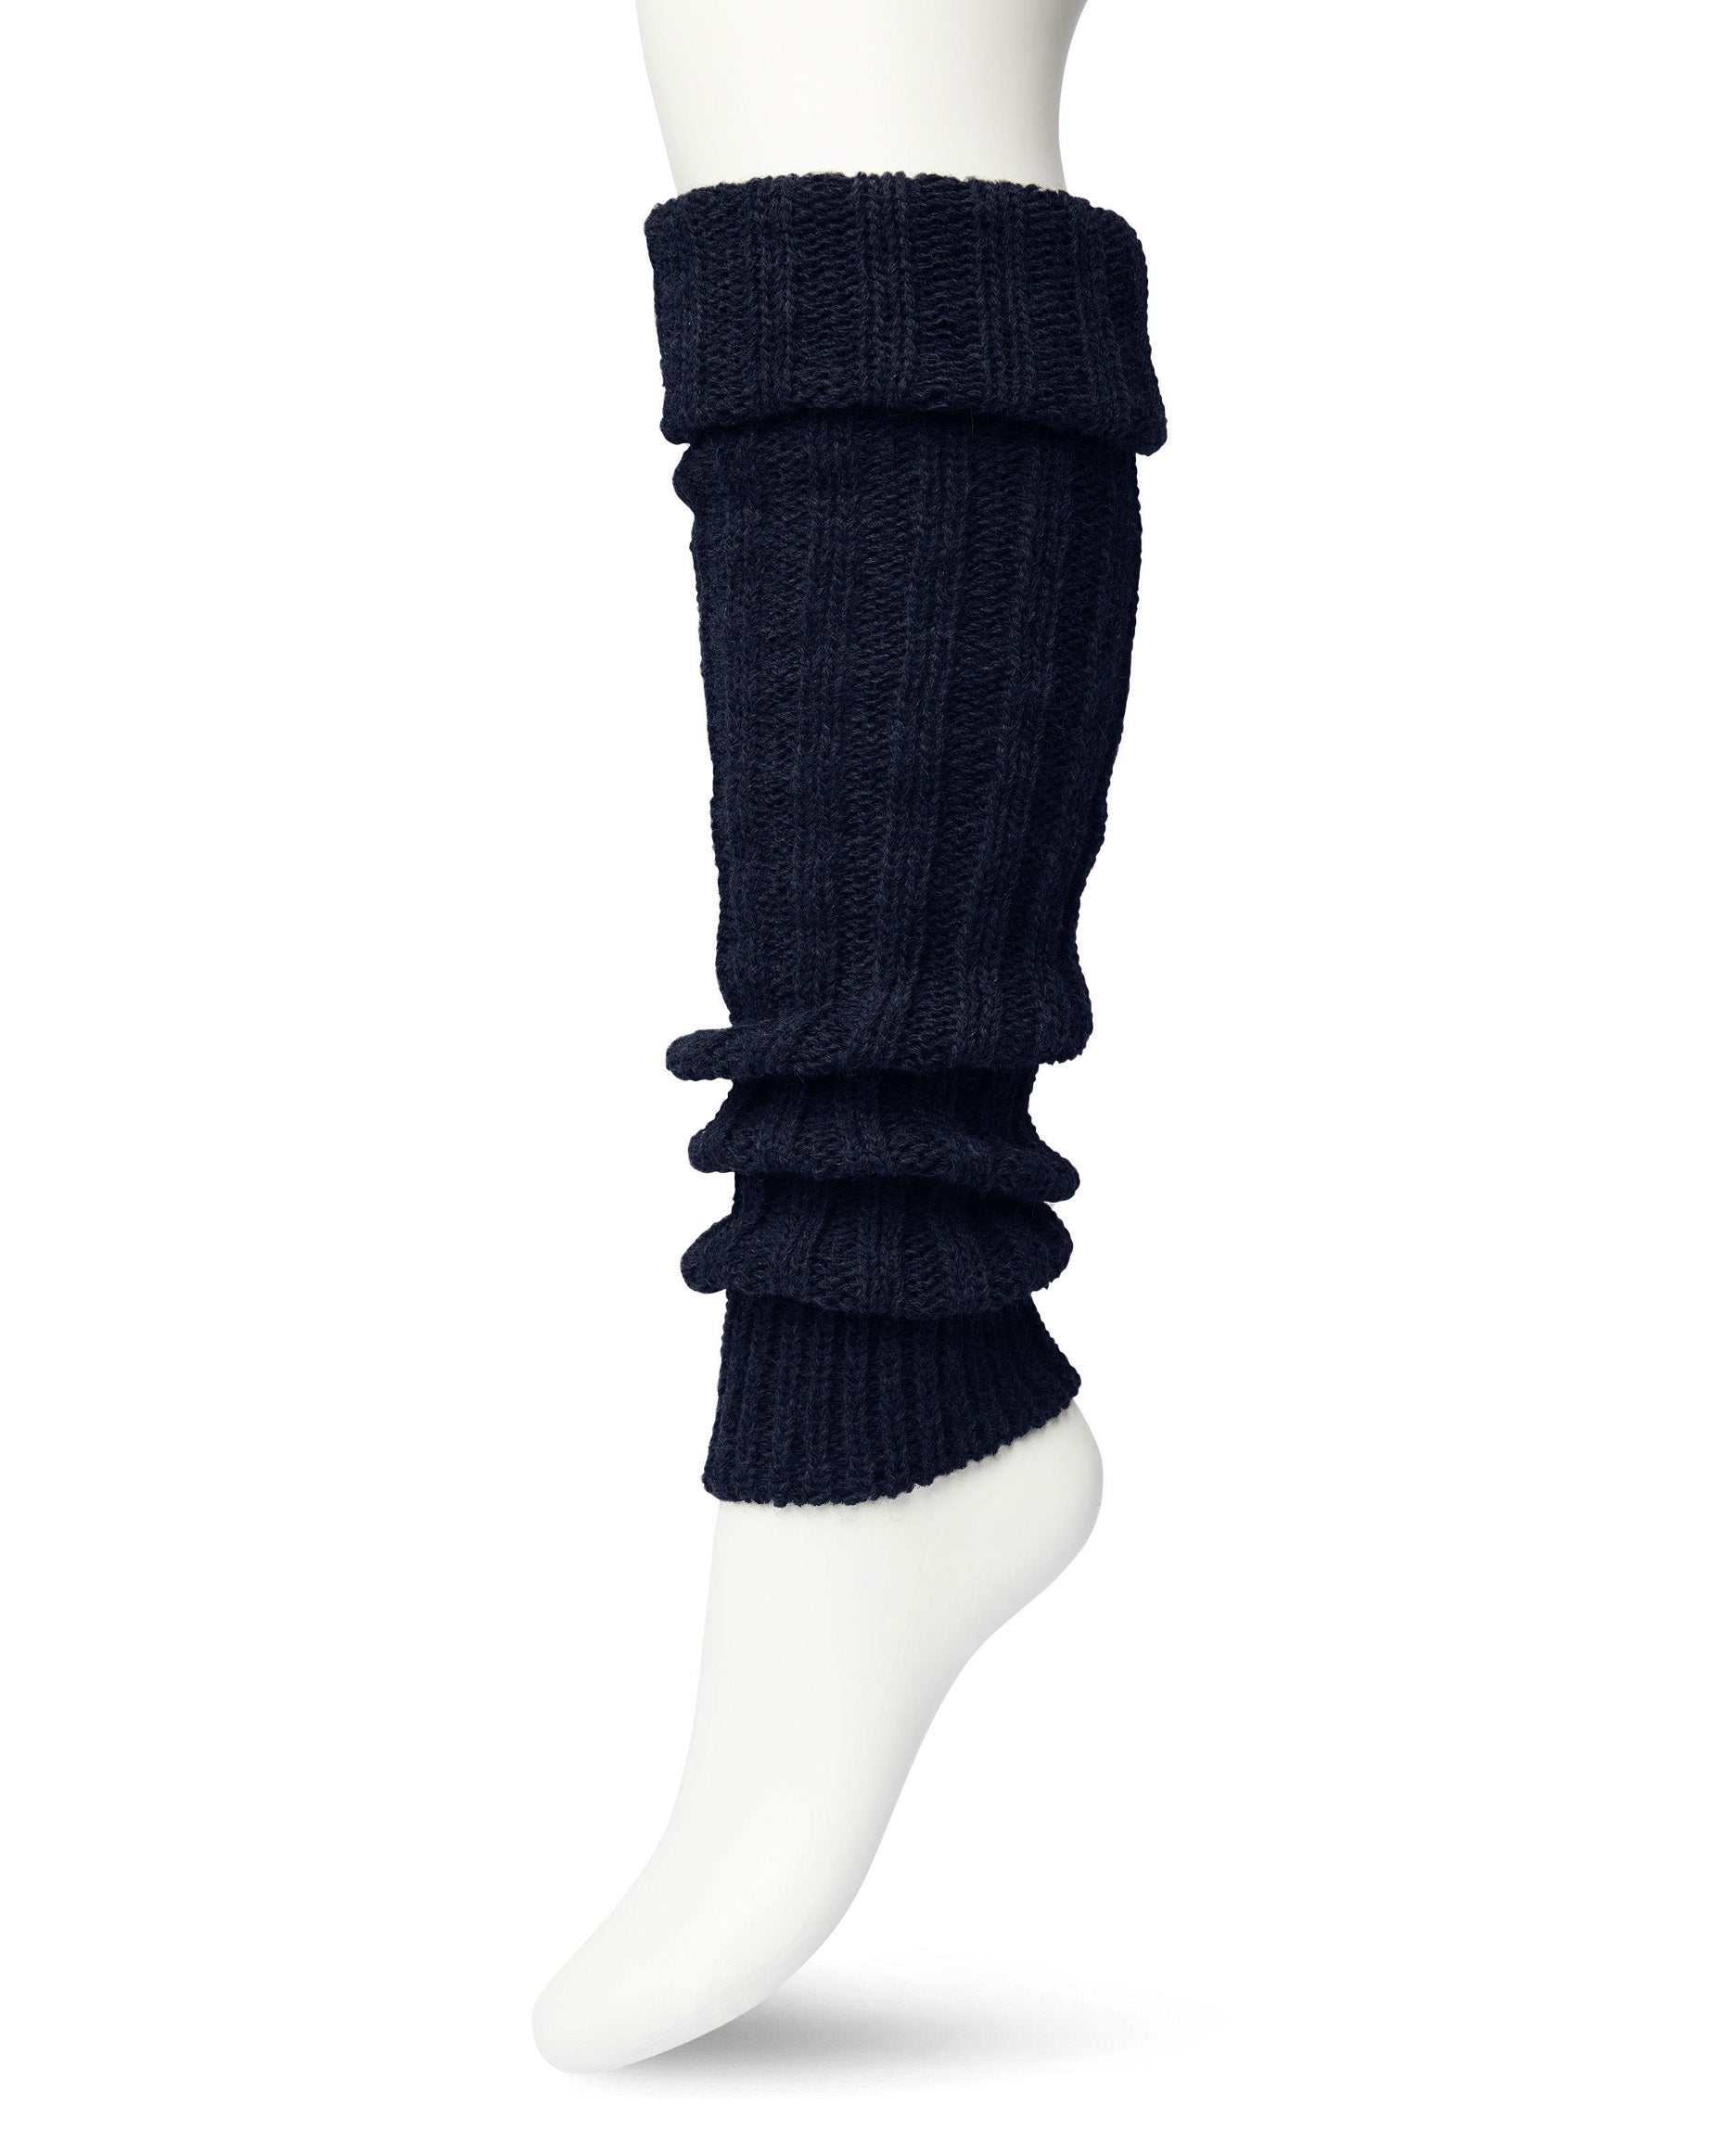 Bonnie Doon Sleever/Legwarmer BE021766 - navy blue wool mix chunky knitted leg warmers